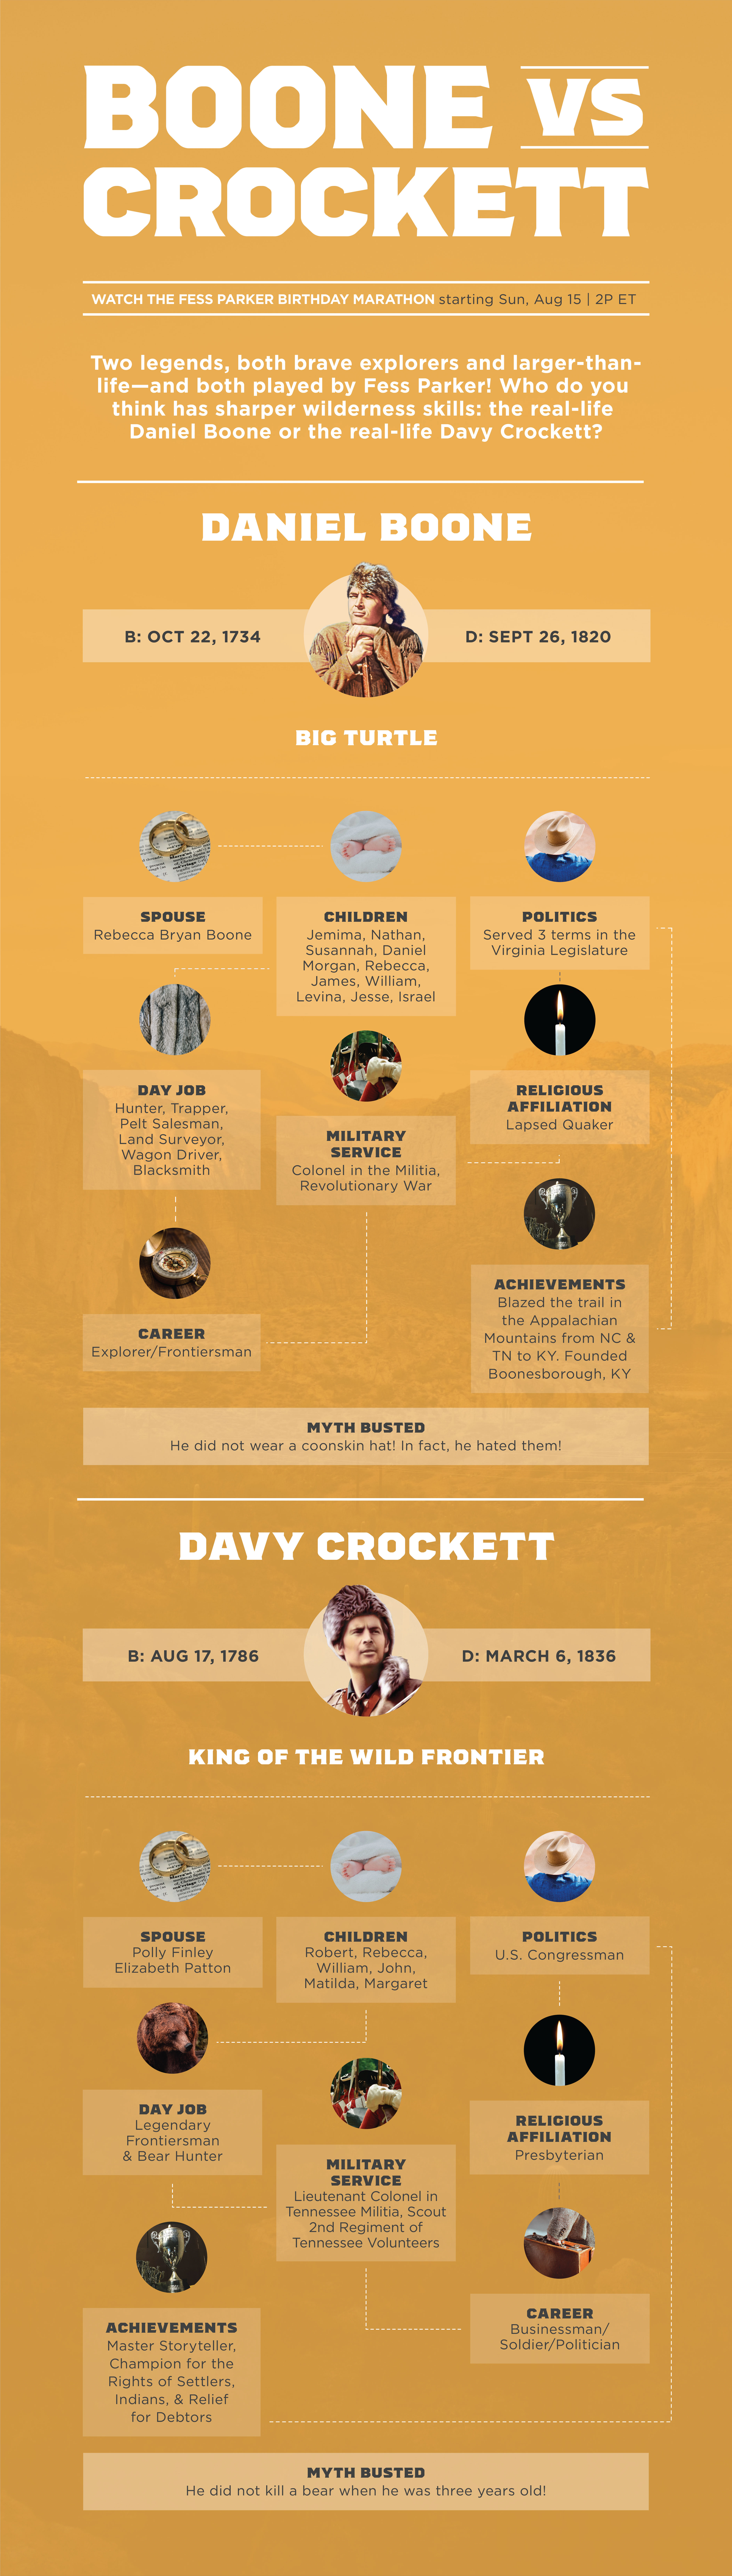 Boone vs. Crockett Infographic